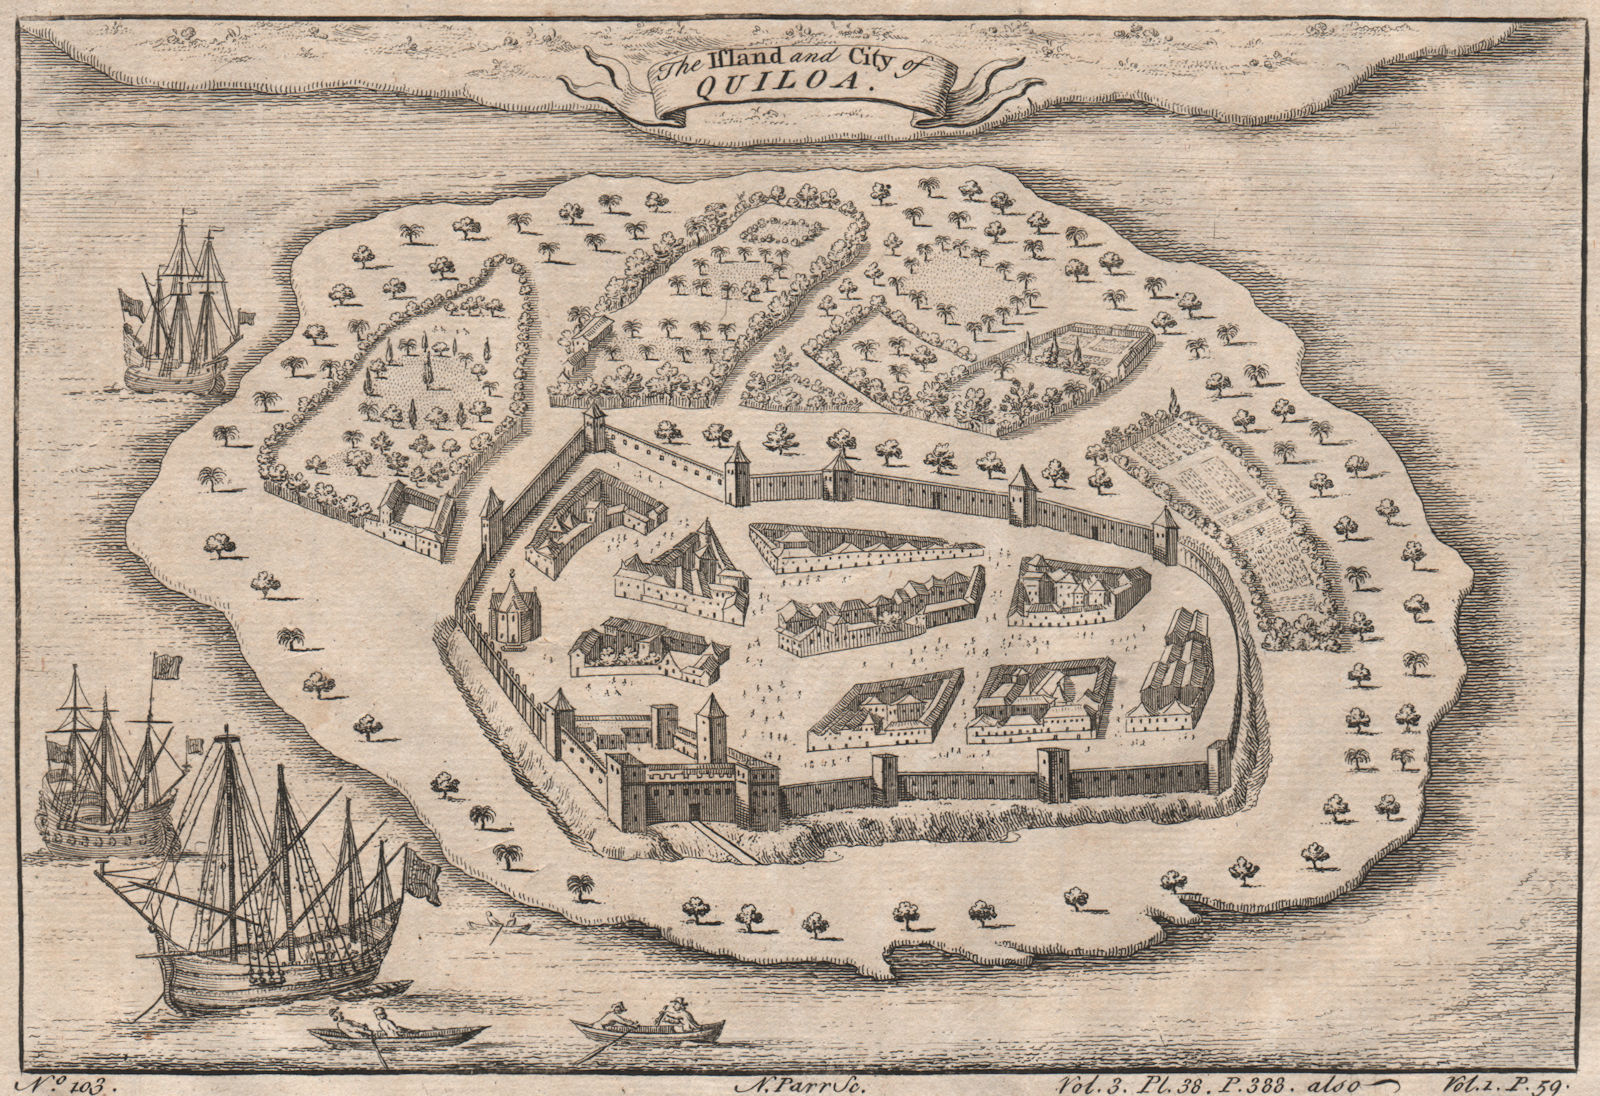 TANZANIA. 'The Island and City of Quiloa'. Kilwa Kisiwani. PARR 1746 old map